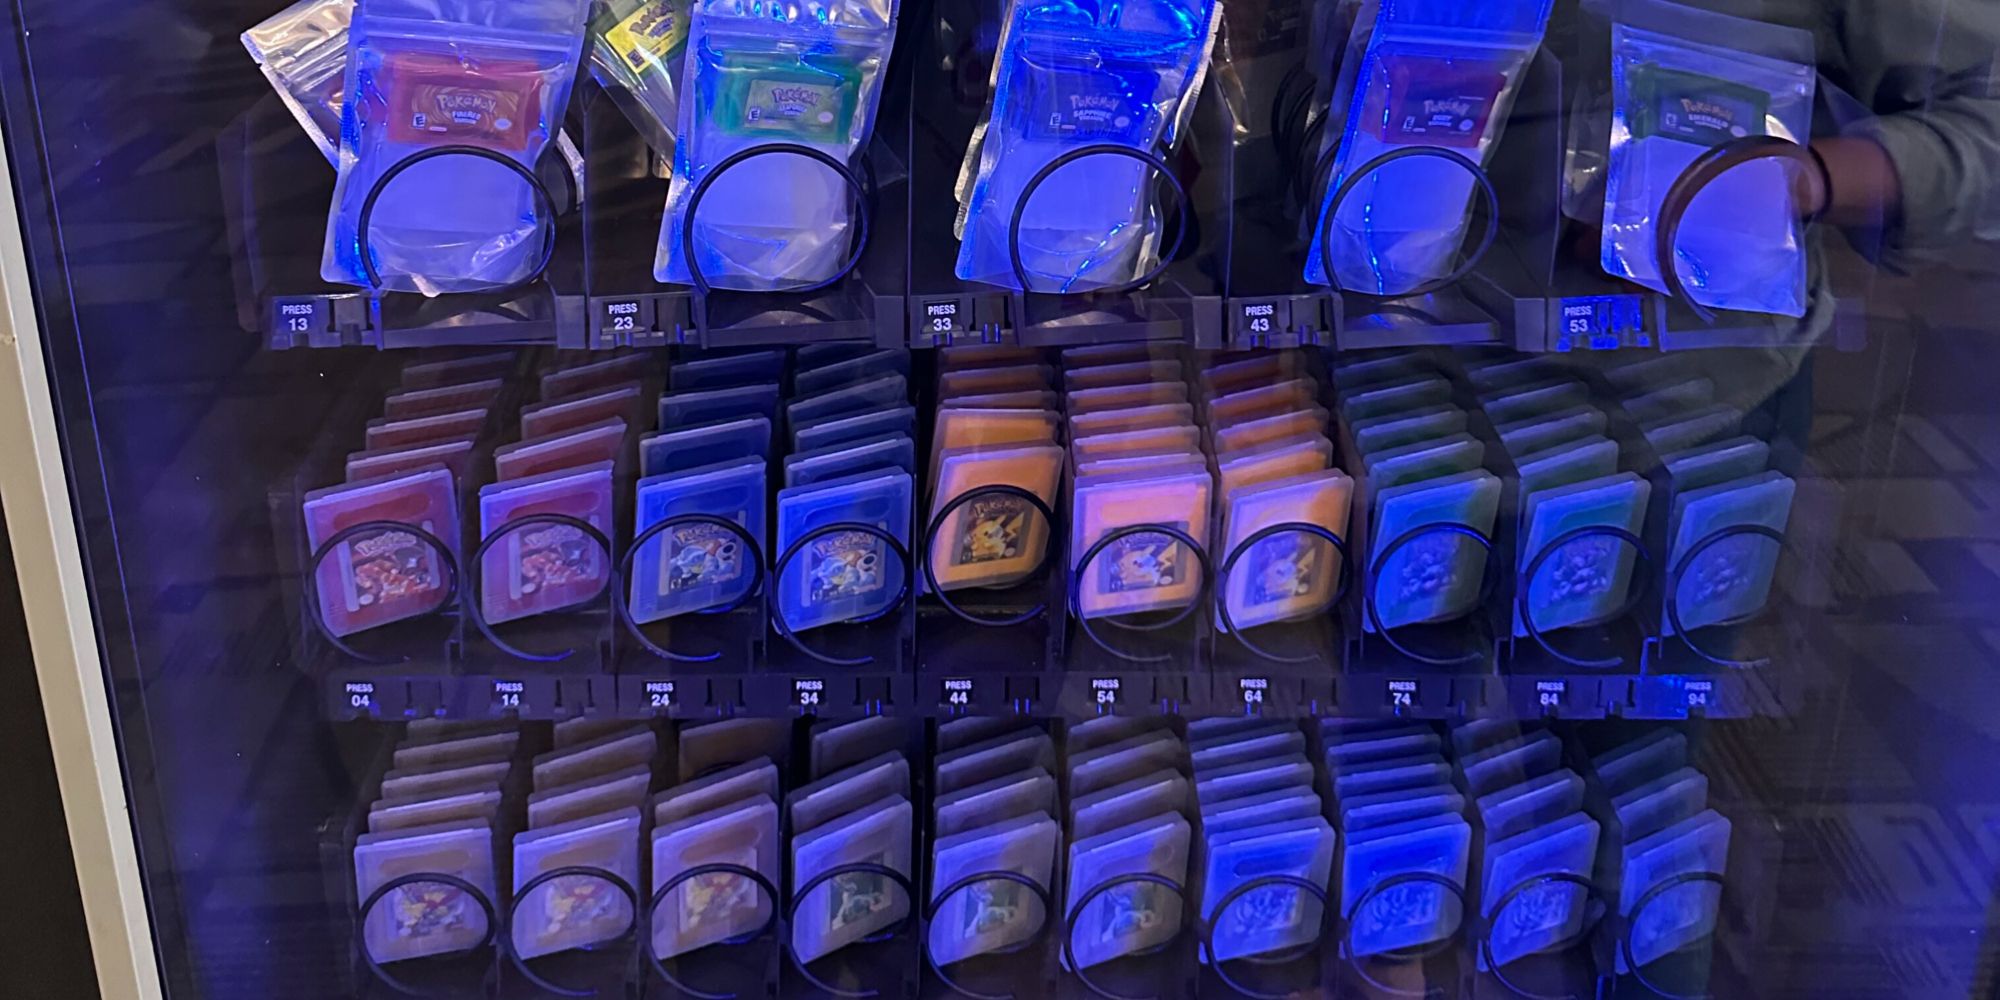 Vending Machines Selling Bootleg Pokemon Games Pop Up In California